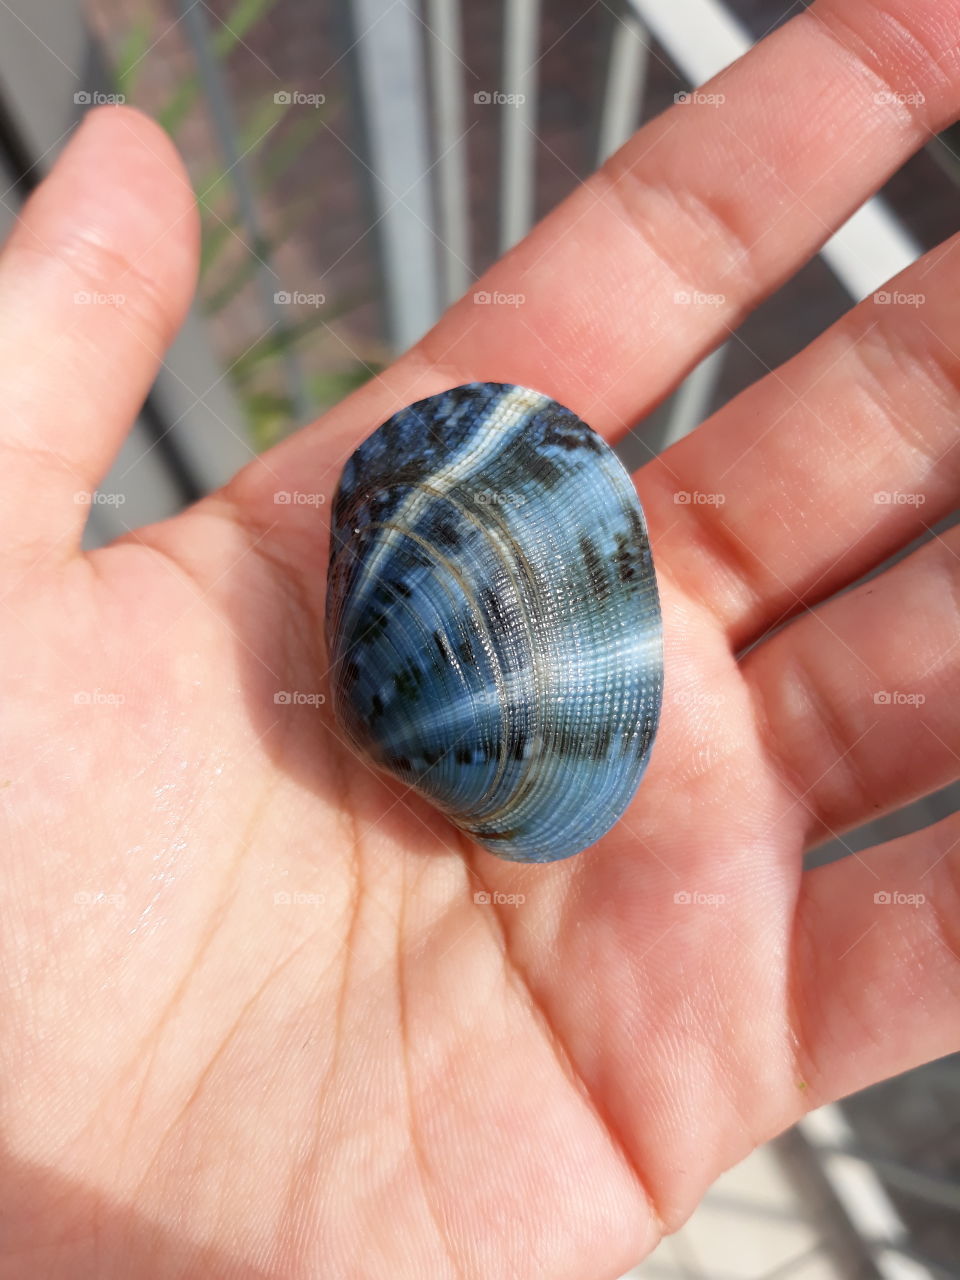 A blue clam